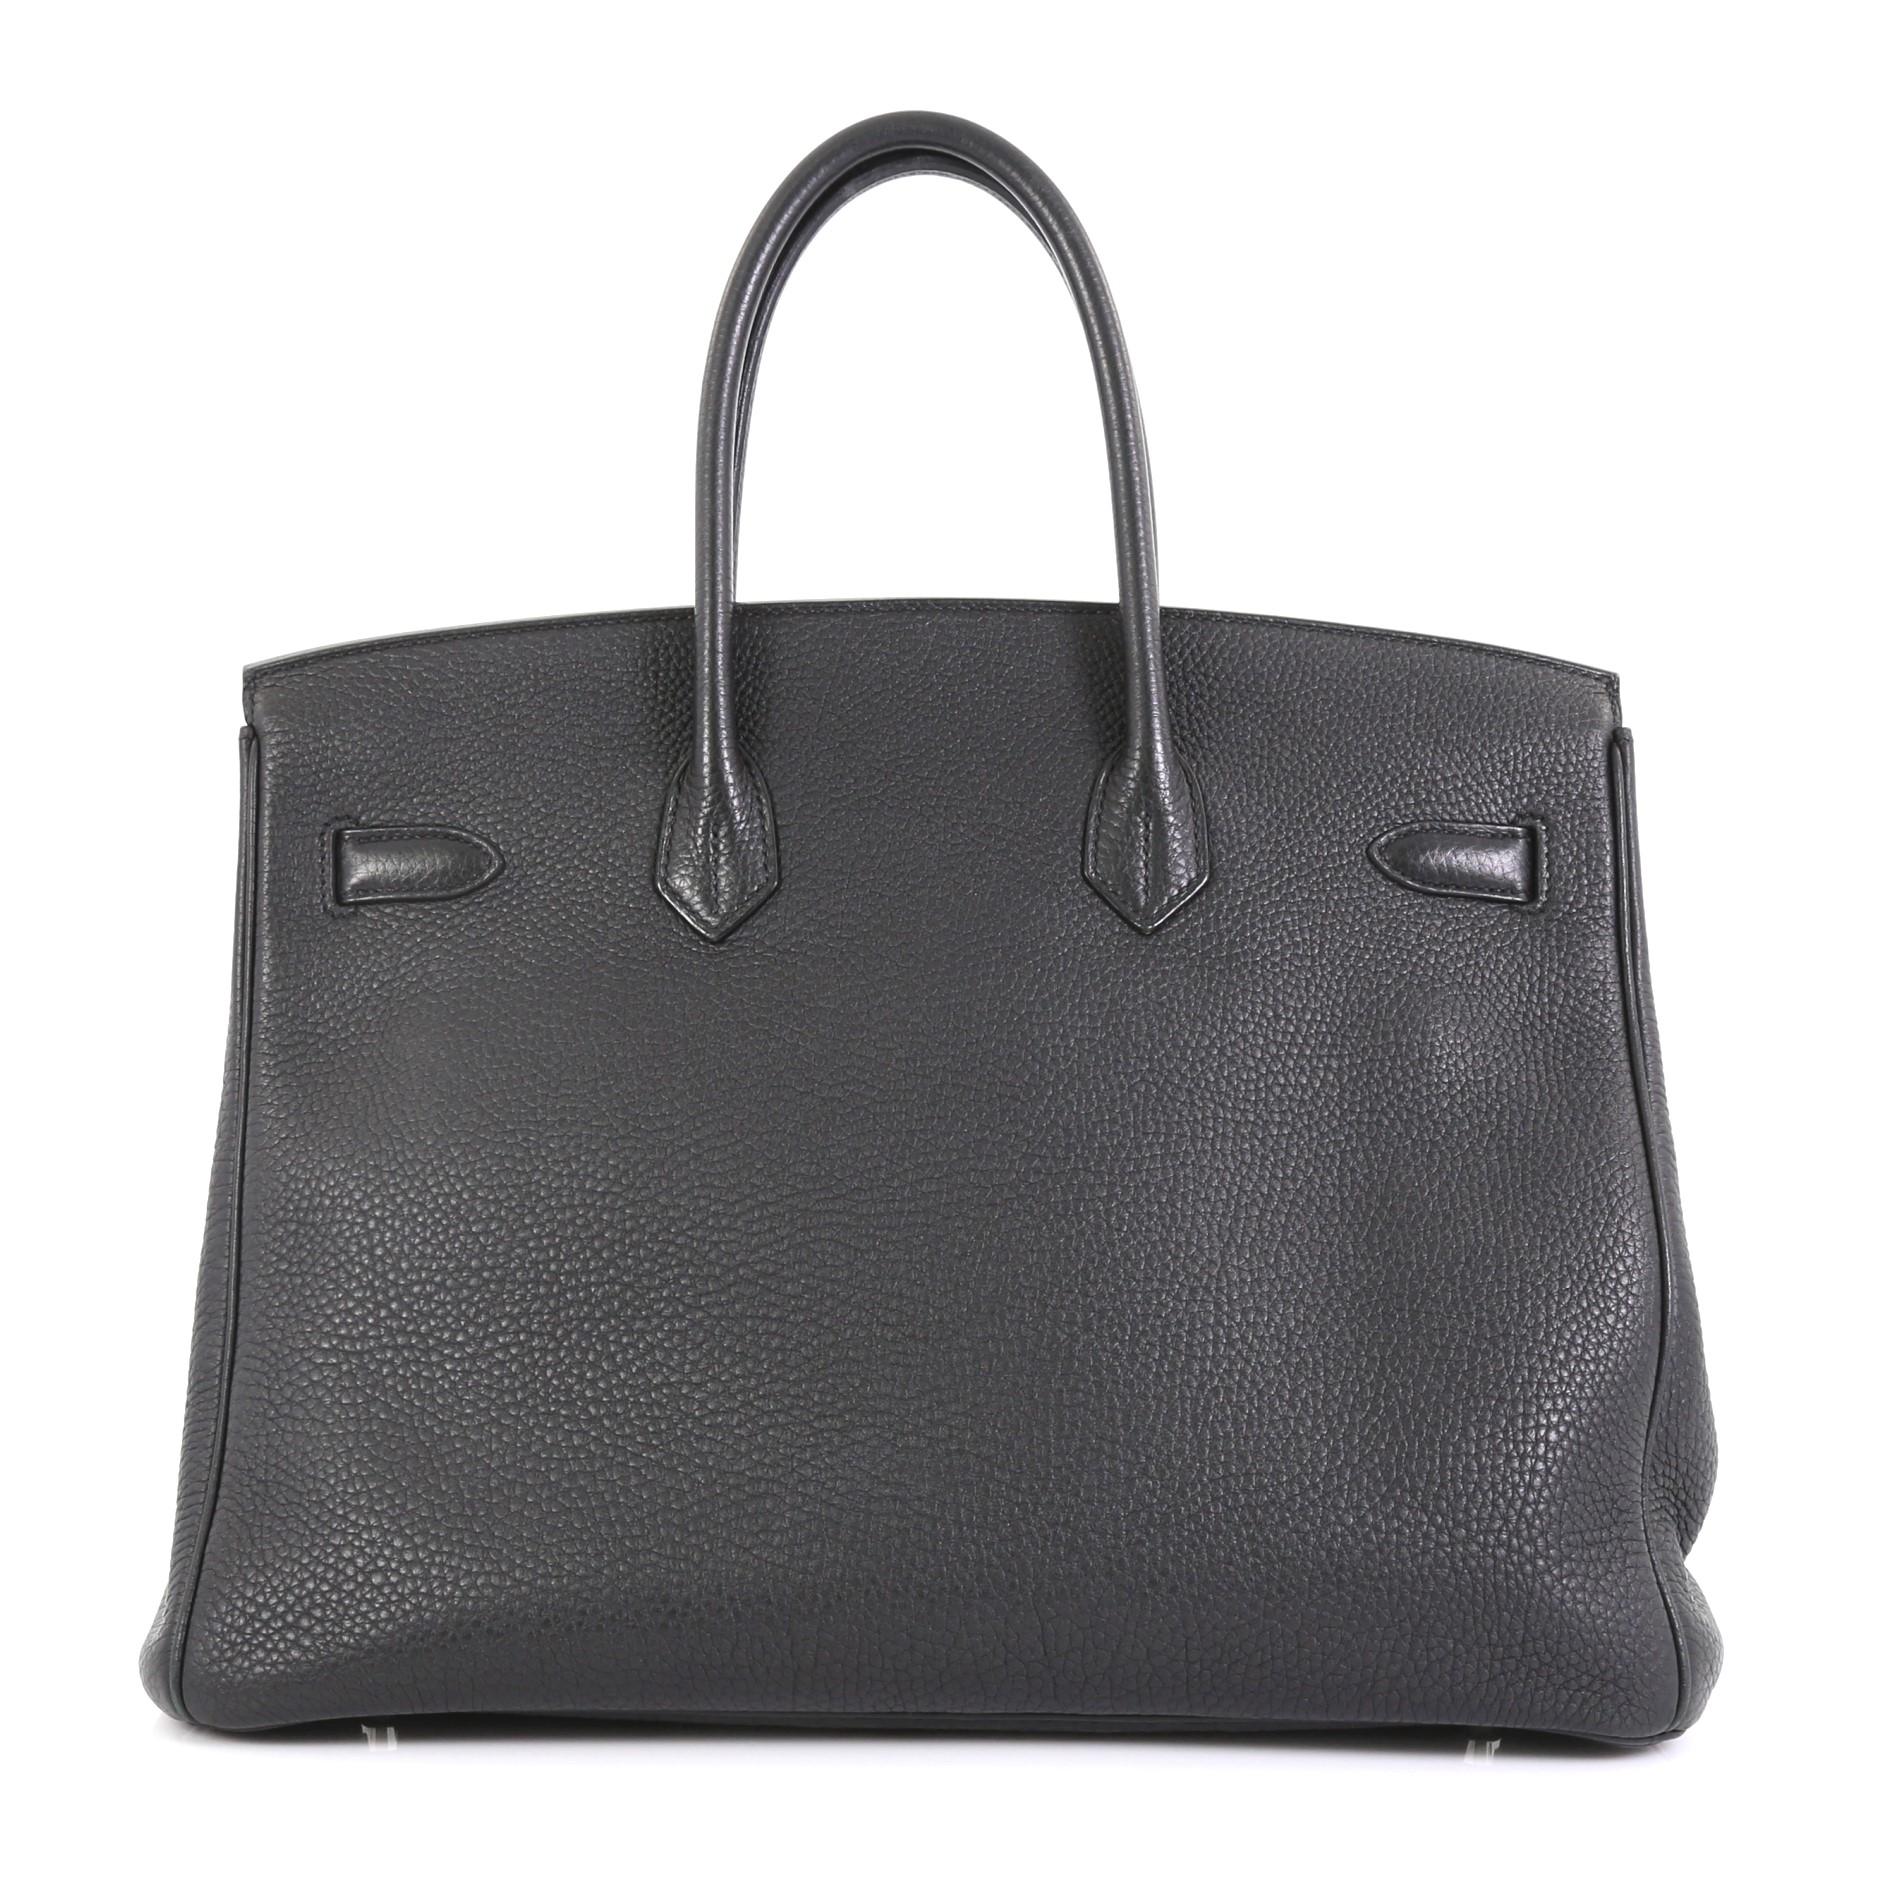 Black Hermes Birkin Handbag Noir Clemence with Palladium Hardware 35